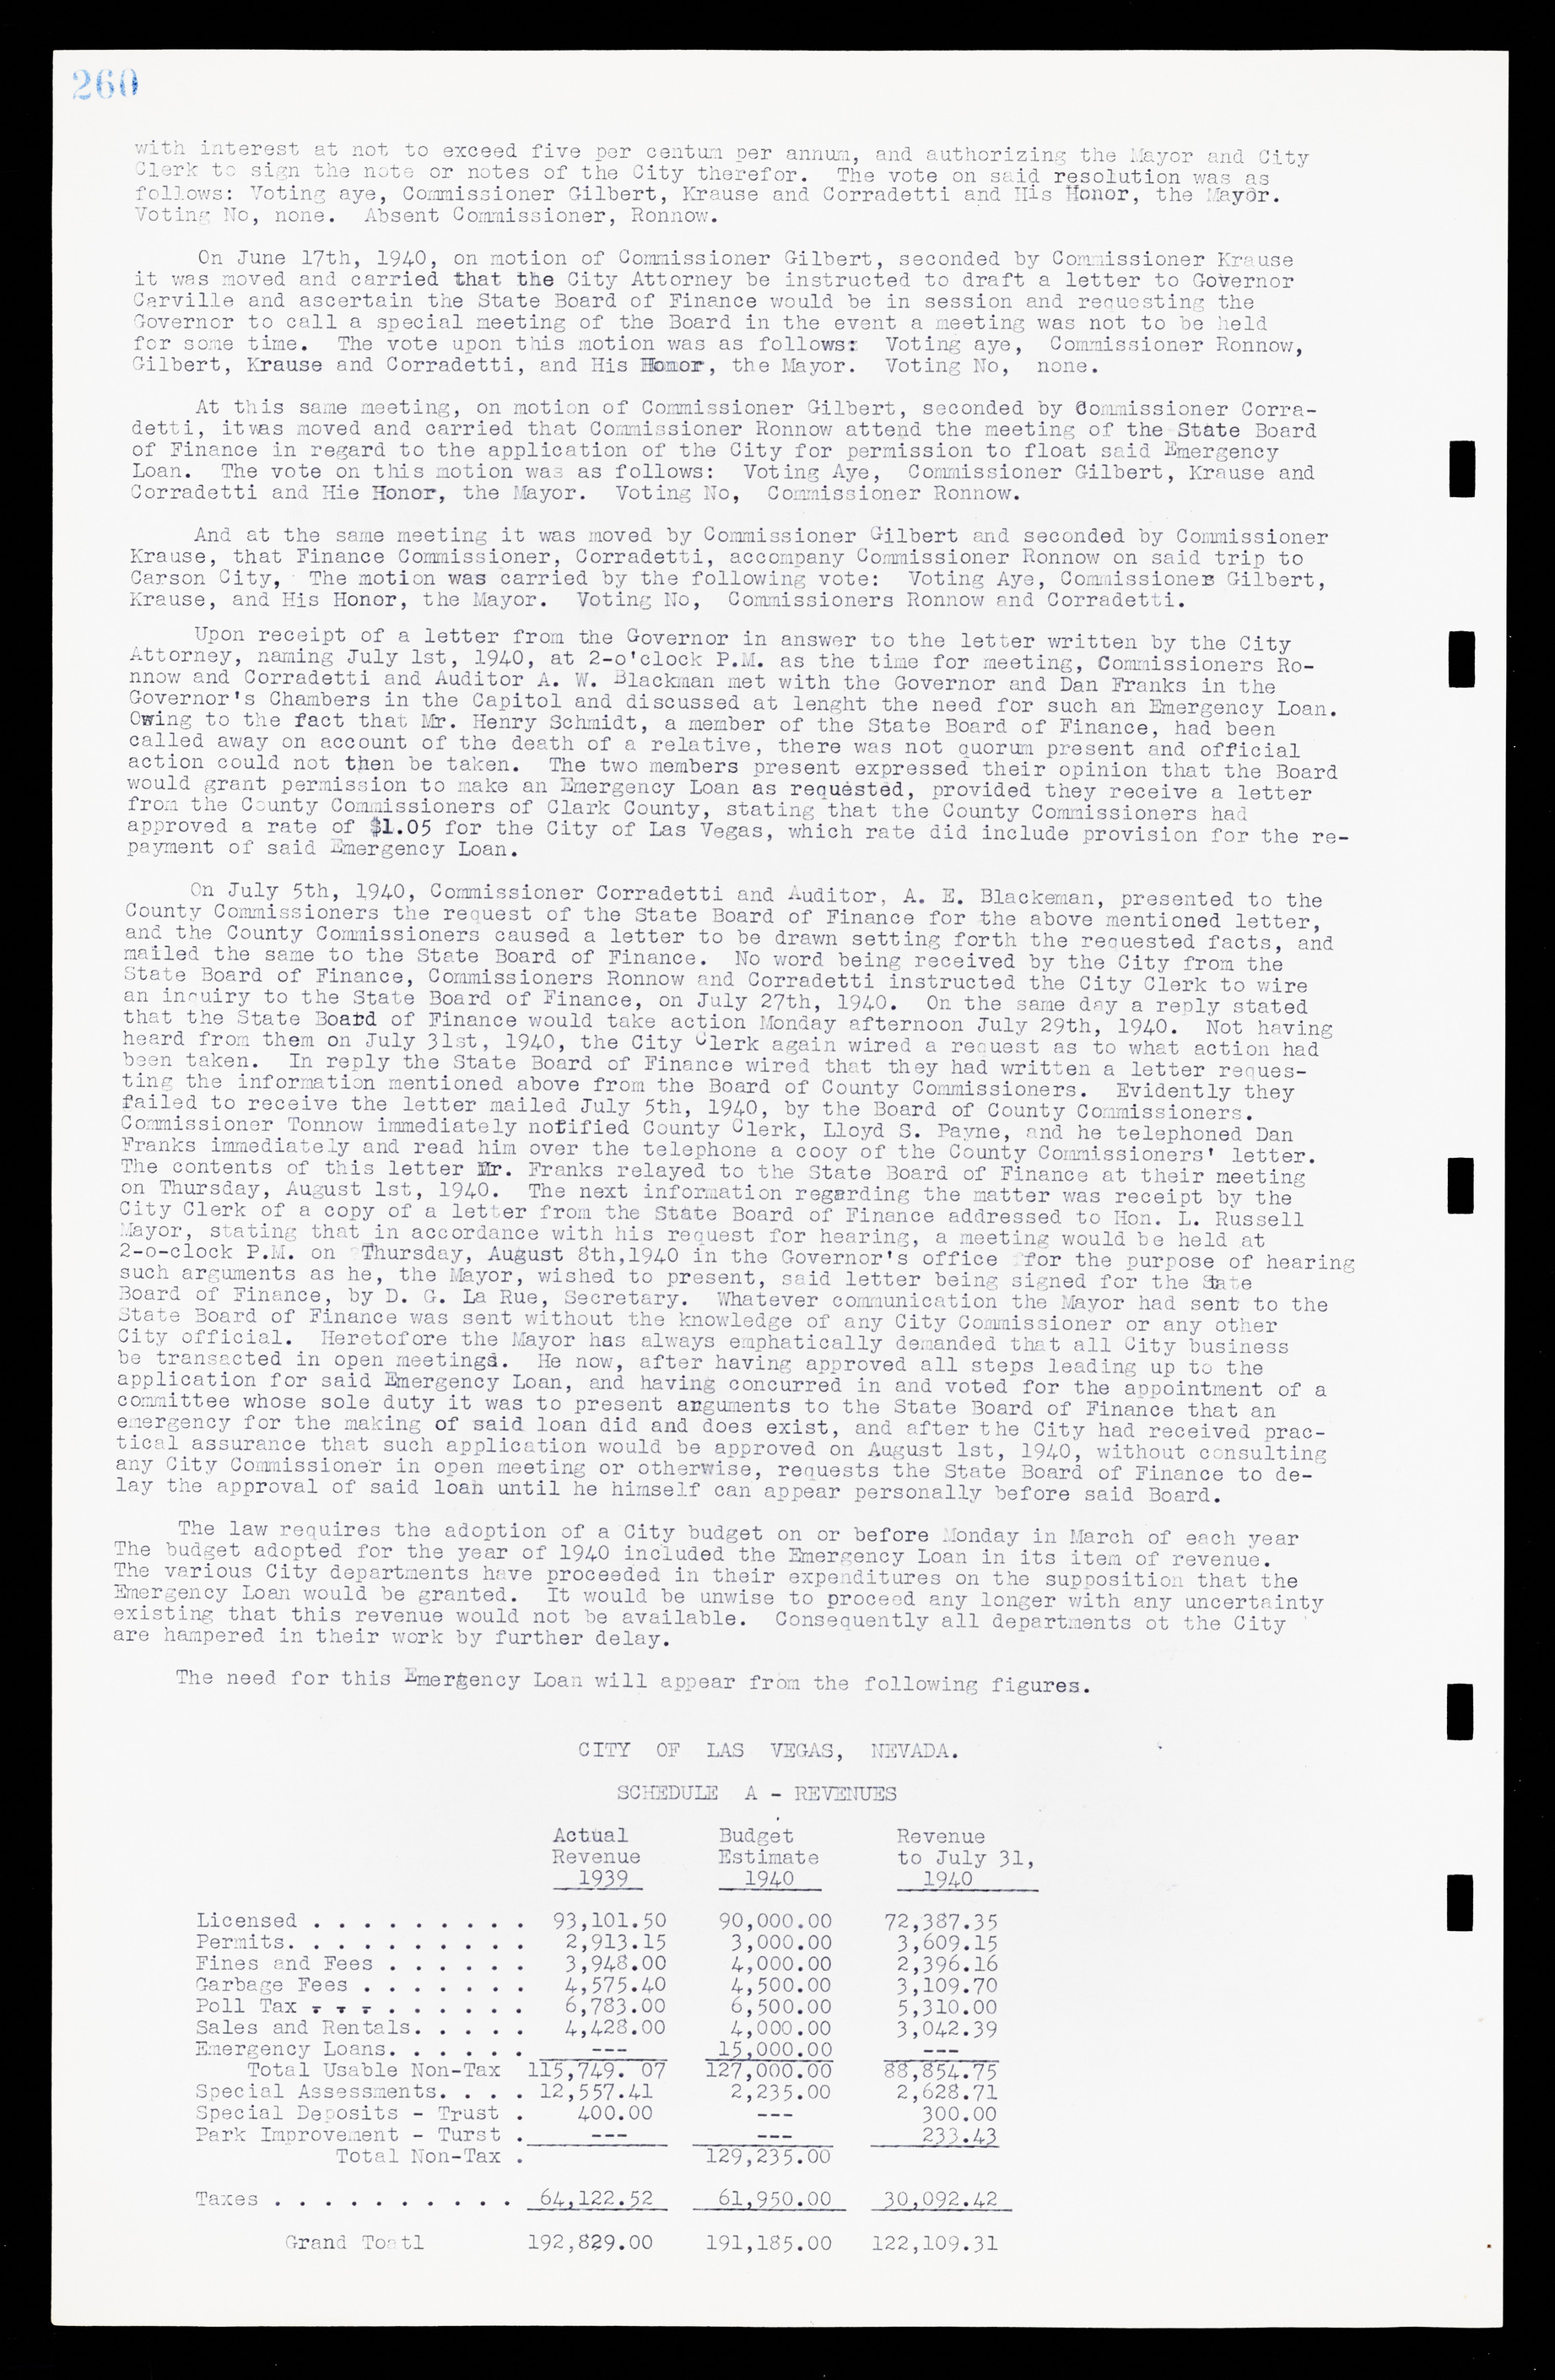 Las Vegas City Commission Minutes, February 17, 1937 to August 4, 1942, lvc000004-282